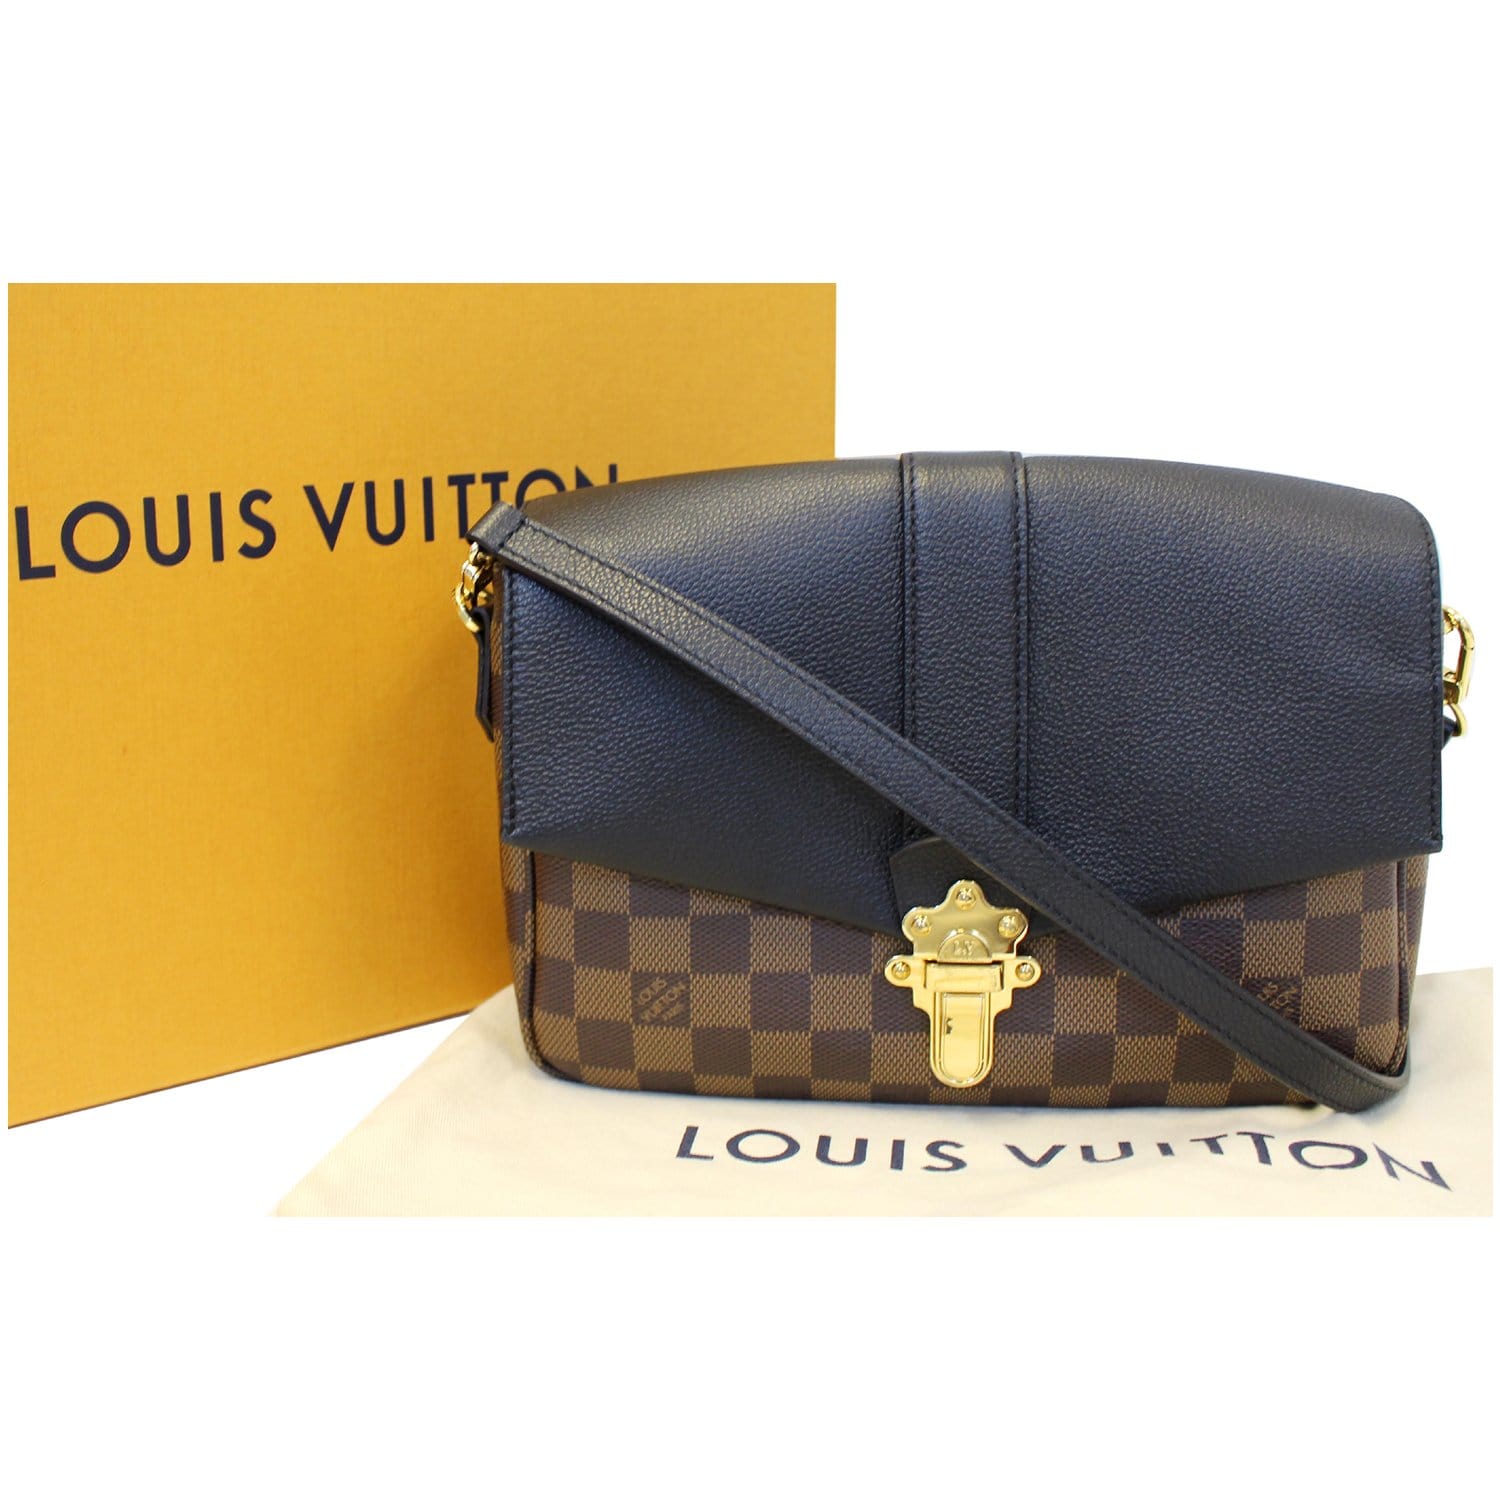 Louis Vuitton Clapton Pm Bag Damier Ebene N44244